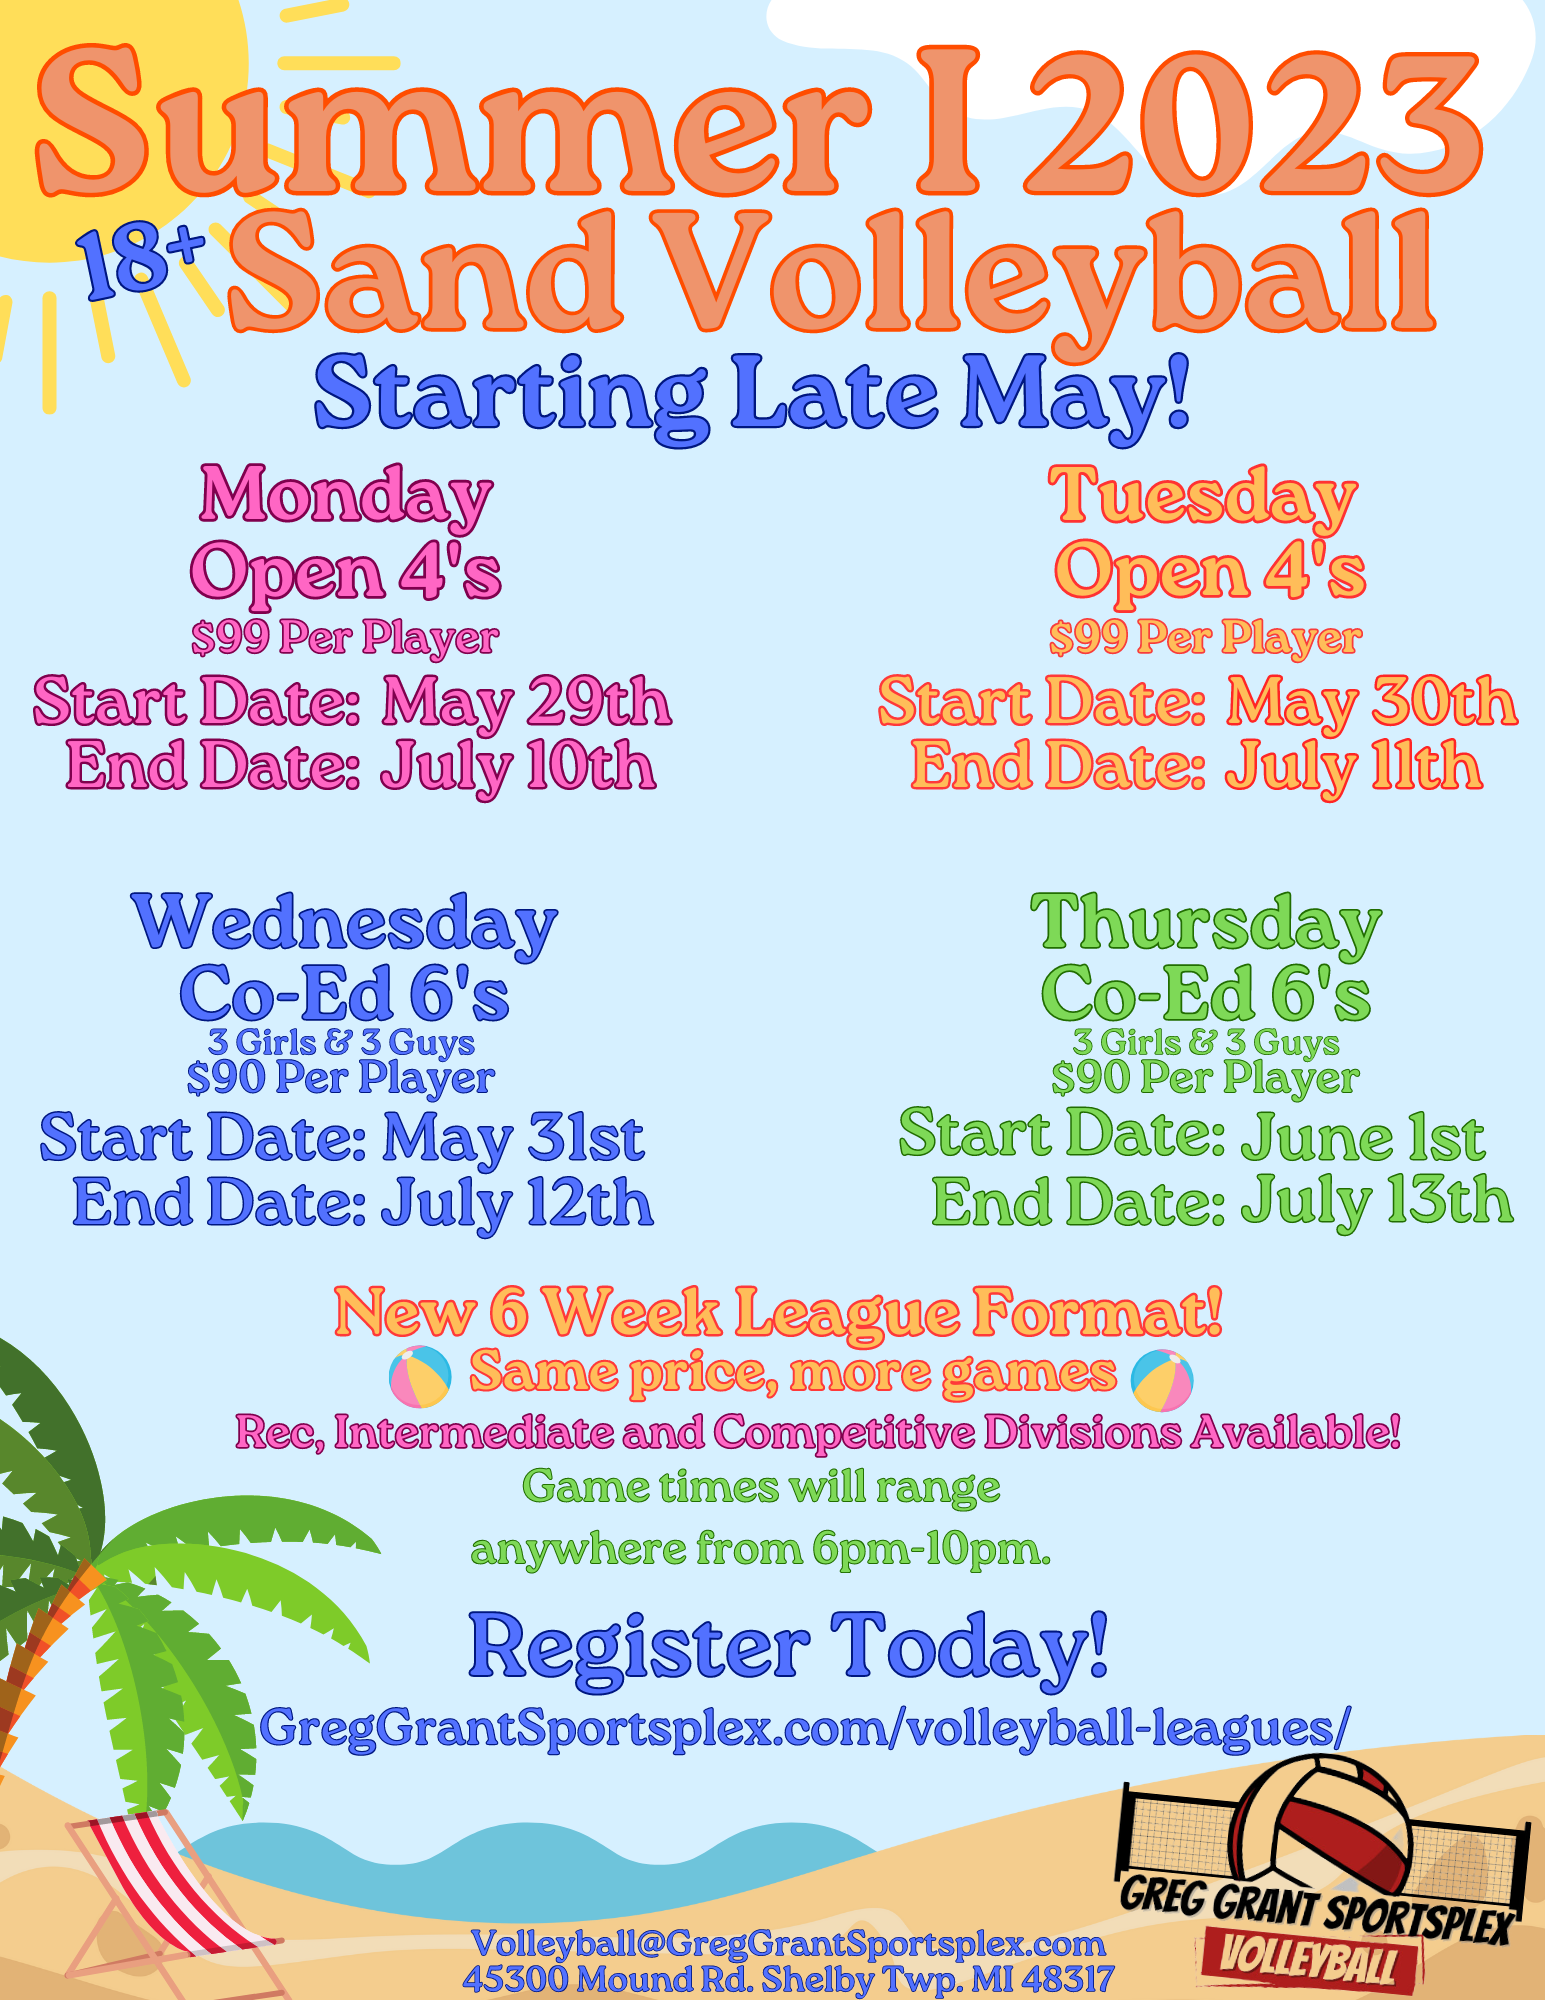 Adult Sand Volleyball Summer I 2023 - Greg Grant Sportsplex